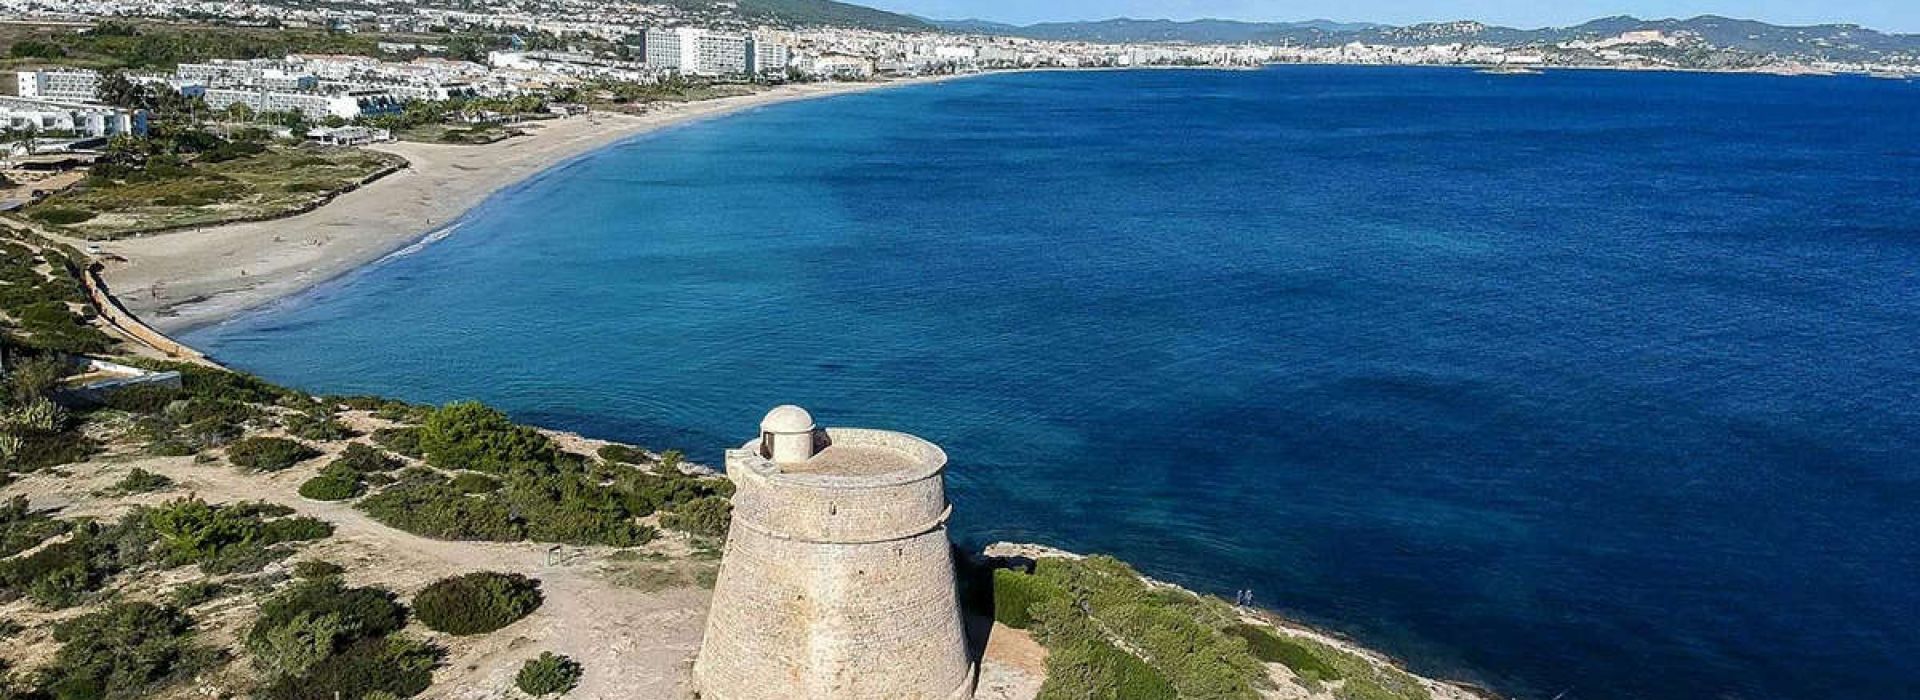 10 reasons to choose Playa d'en Bossa as your Ibiza holiday destination